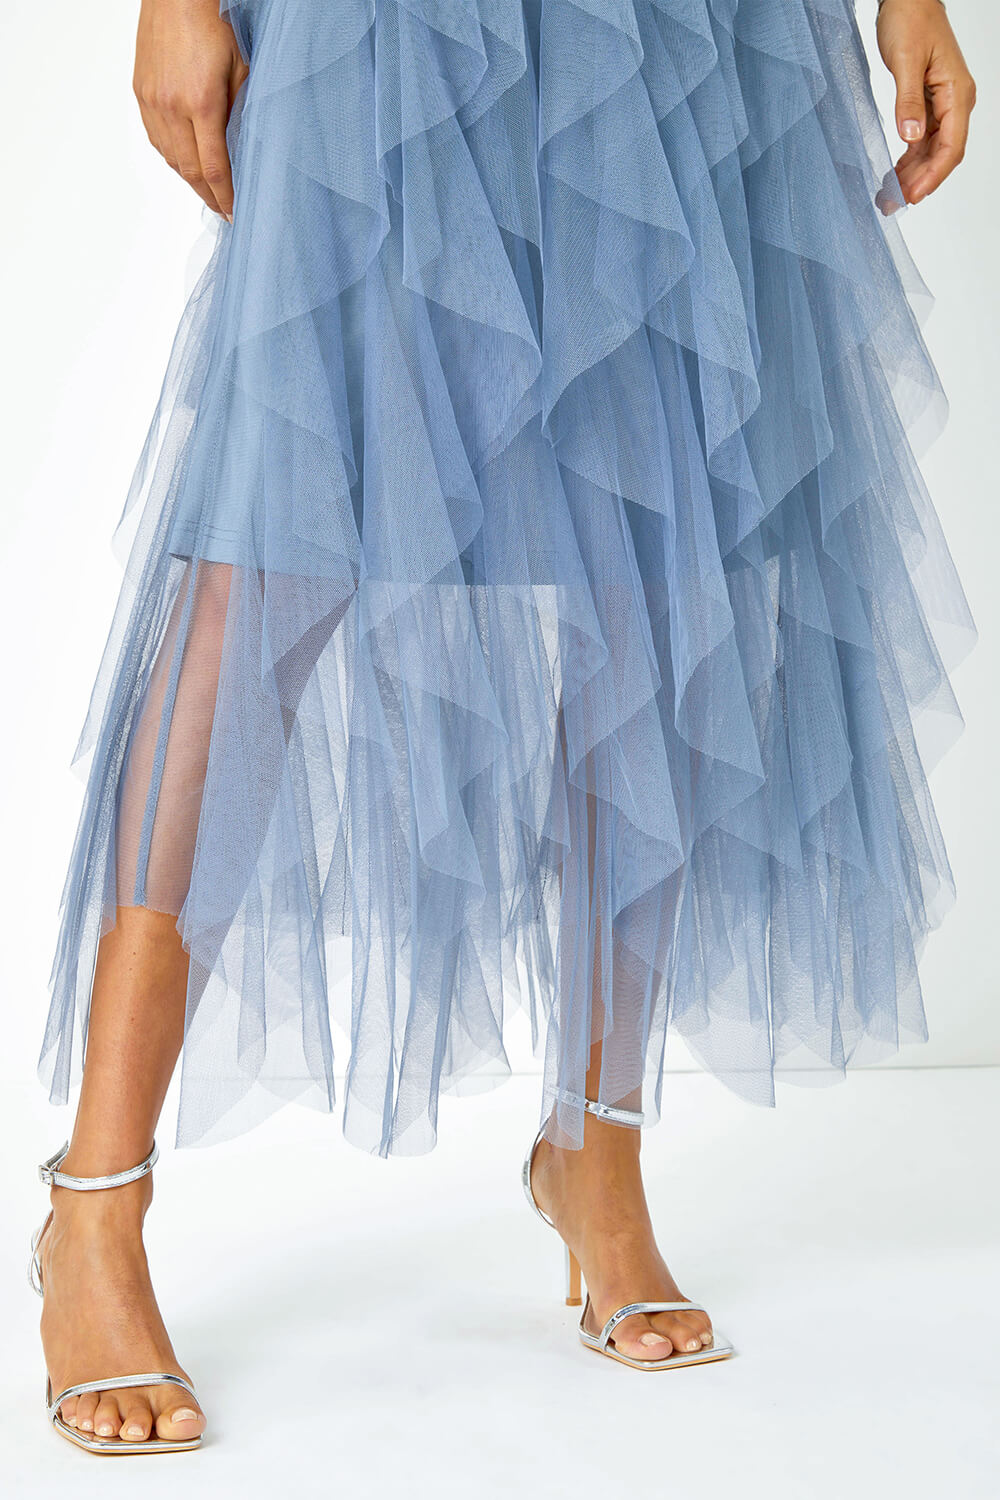 Steel Blue Elasticated Mesh Layered Skirt, Image 5 of 5